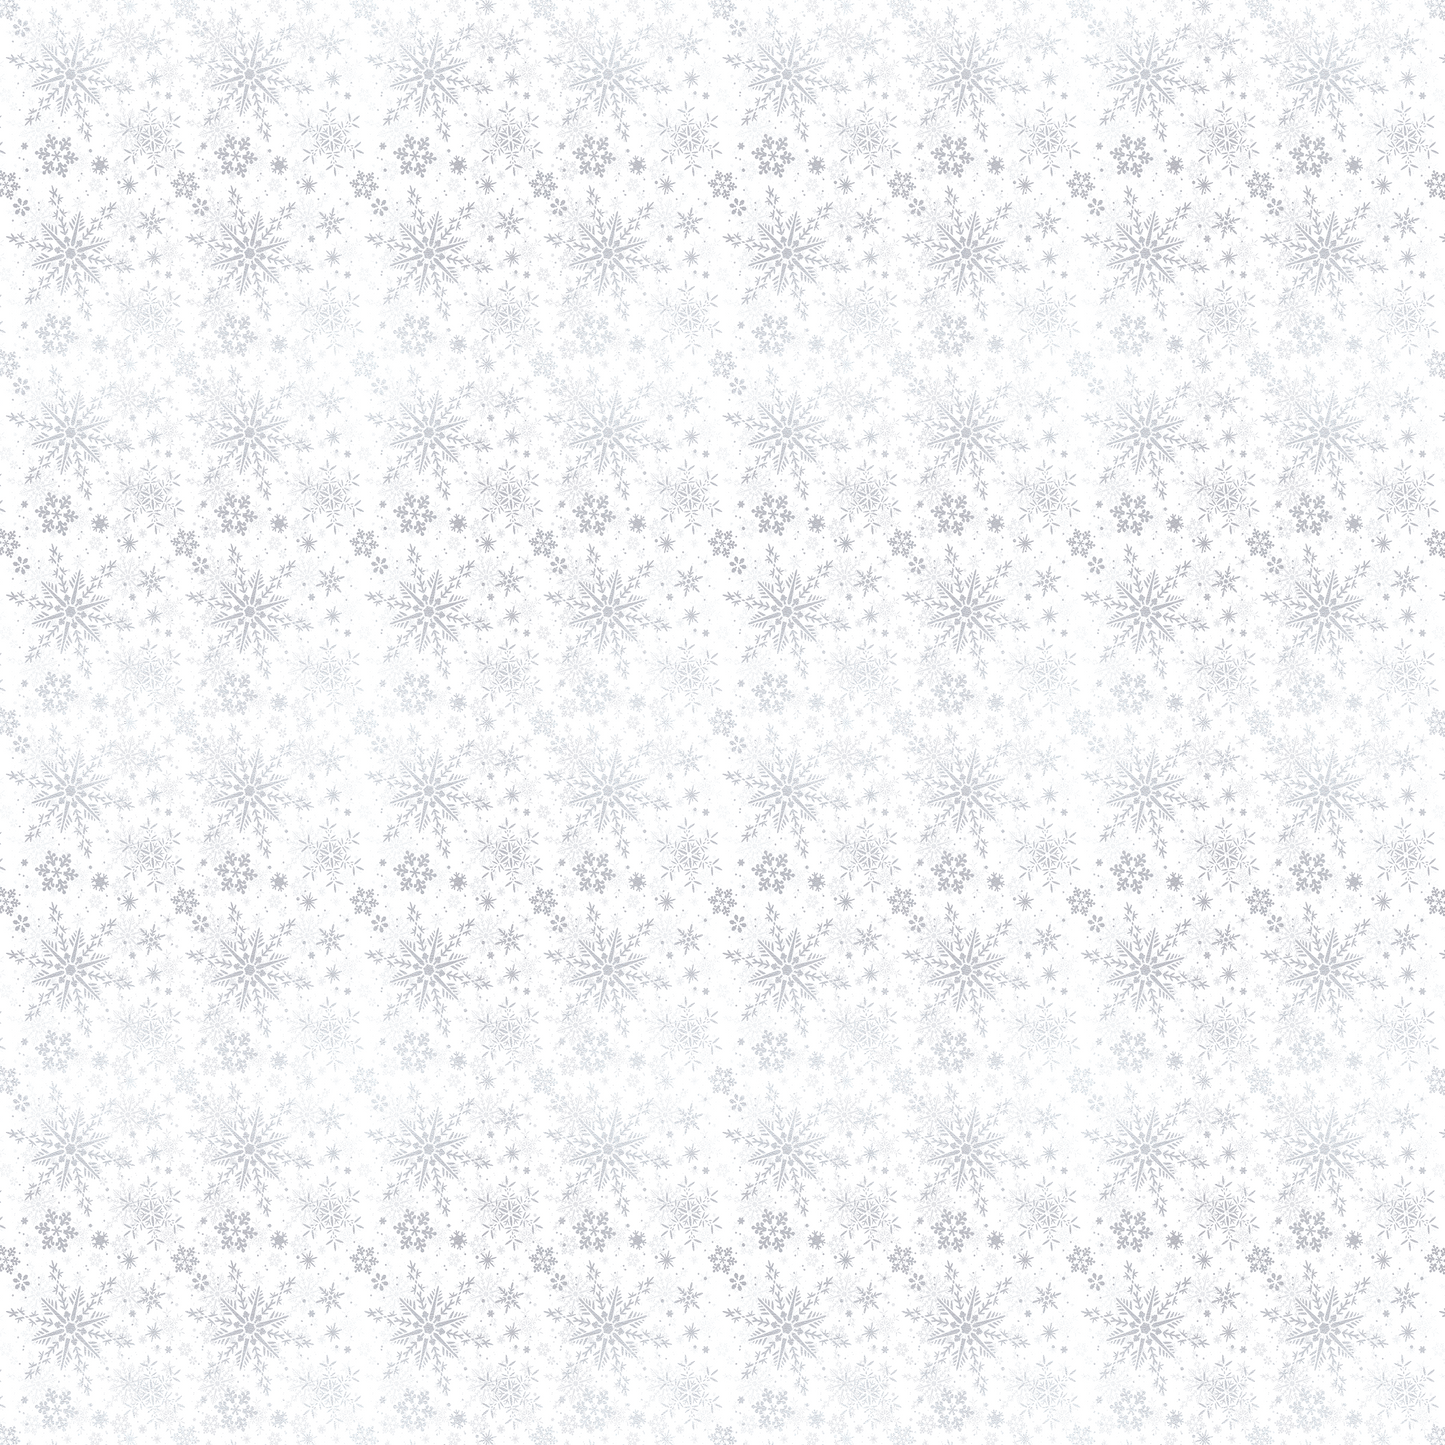 Silver Snowflakes on a White Background 001